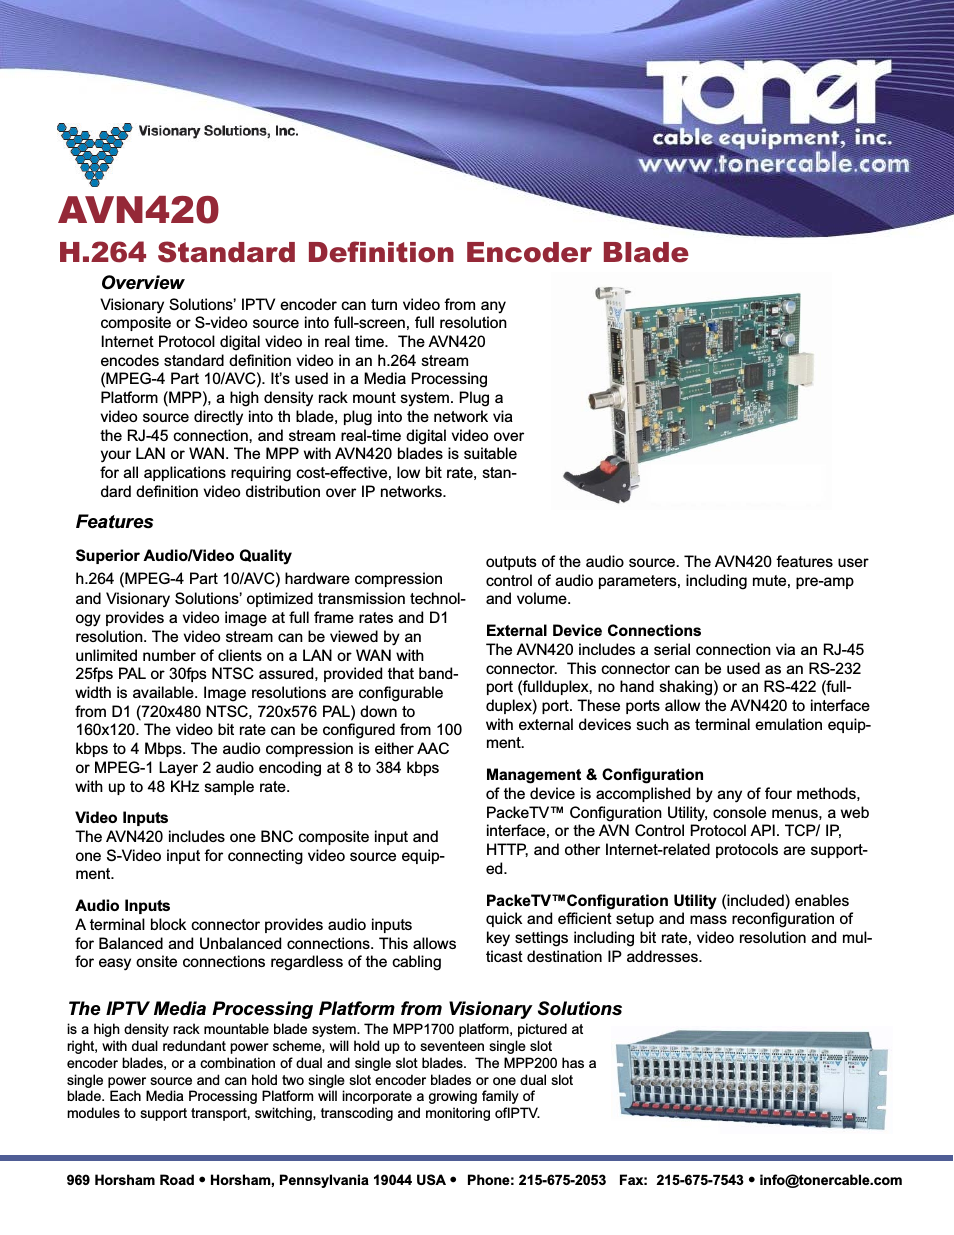 AVN420 H.264 Standard Definition Blade